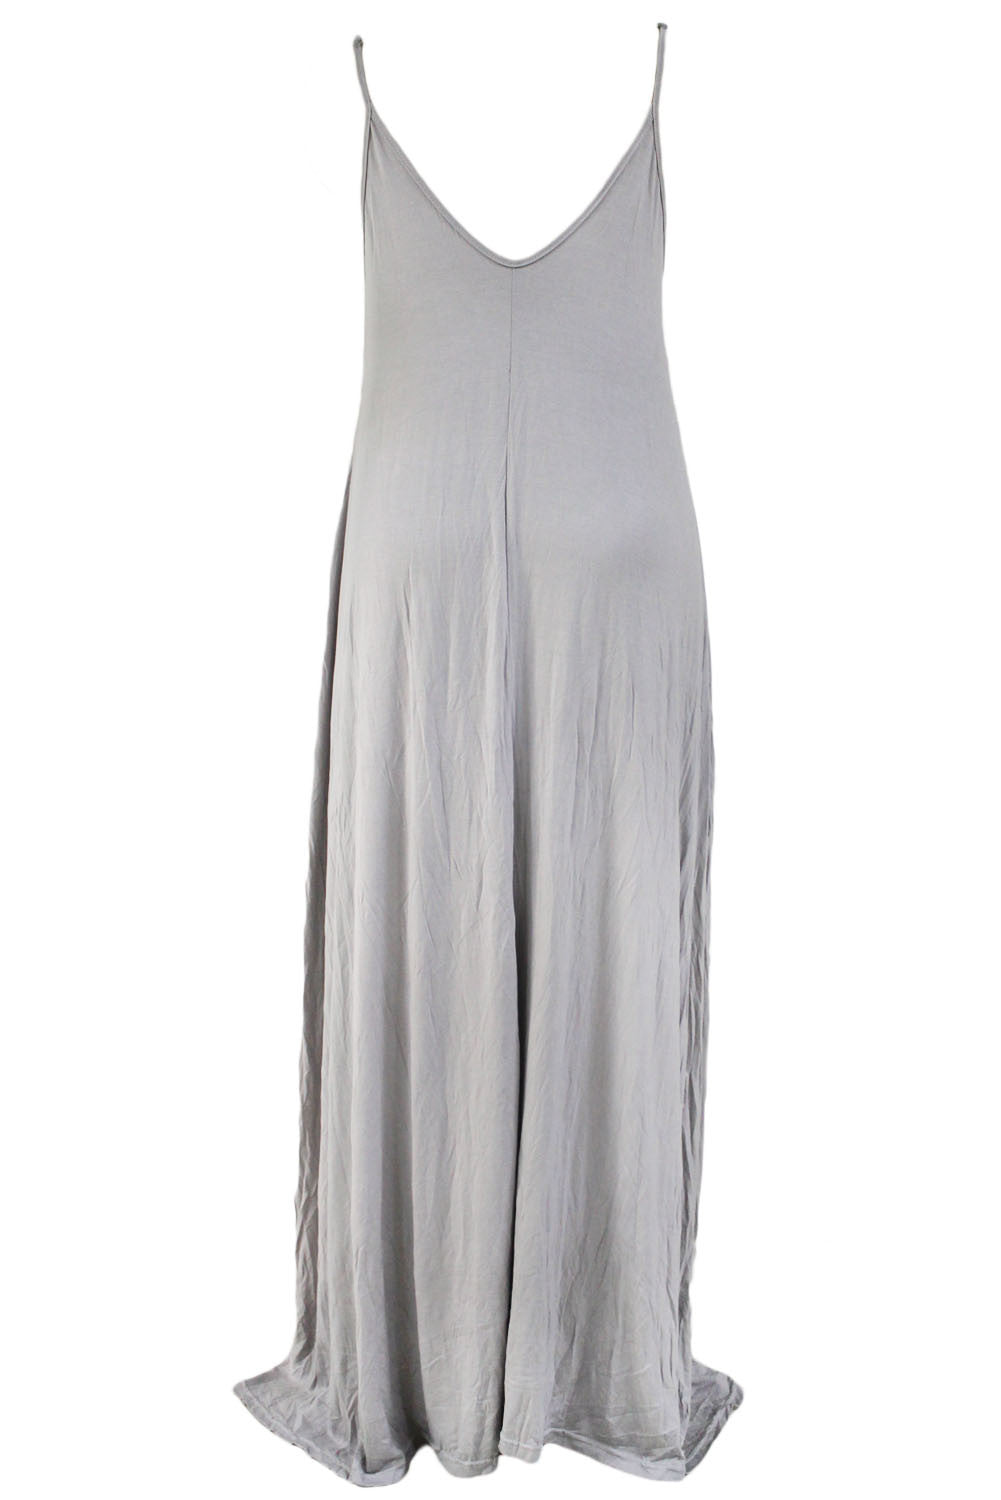 silver boho dress